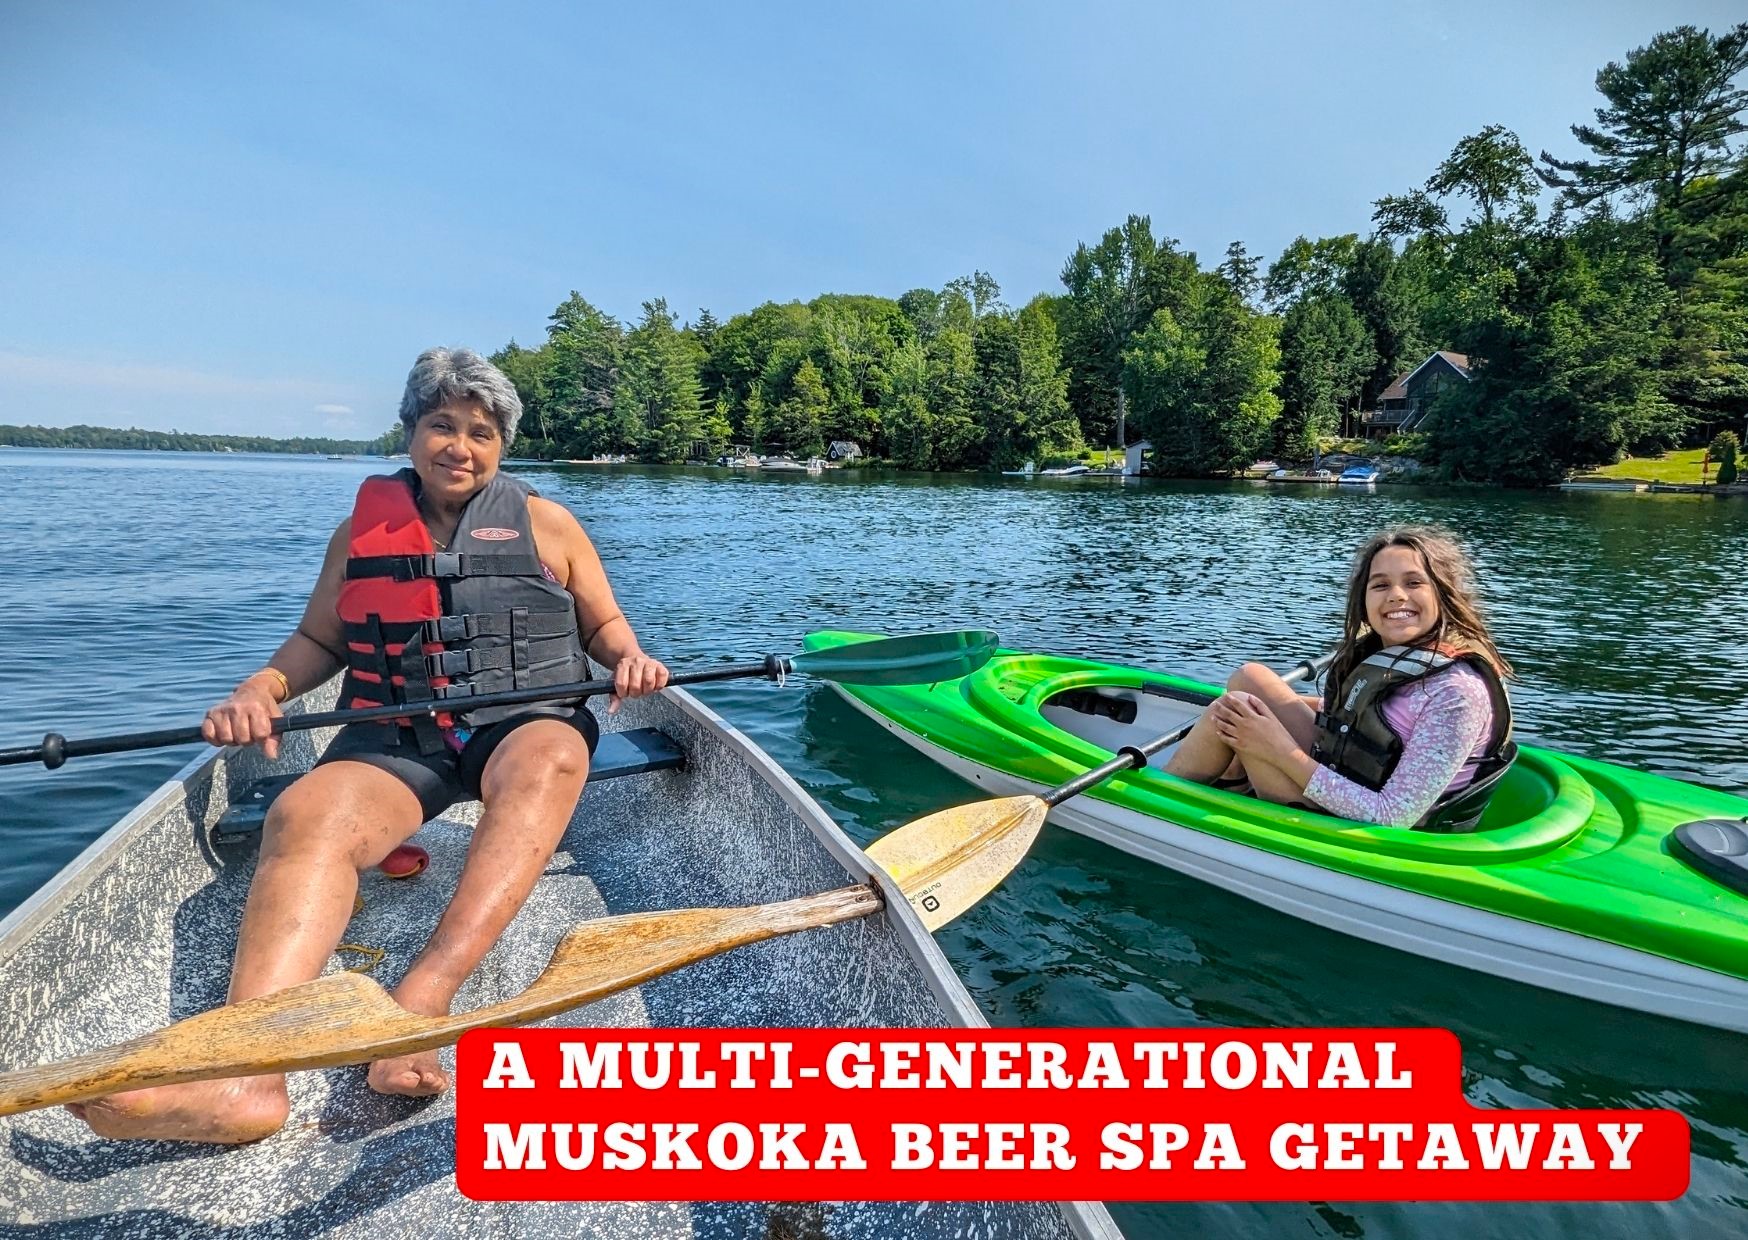 Multigenerational muskoka beer spa getaway